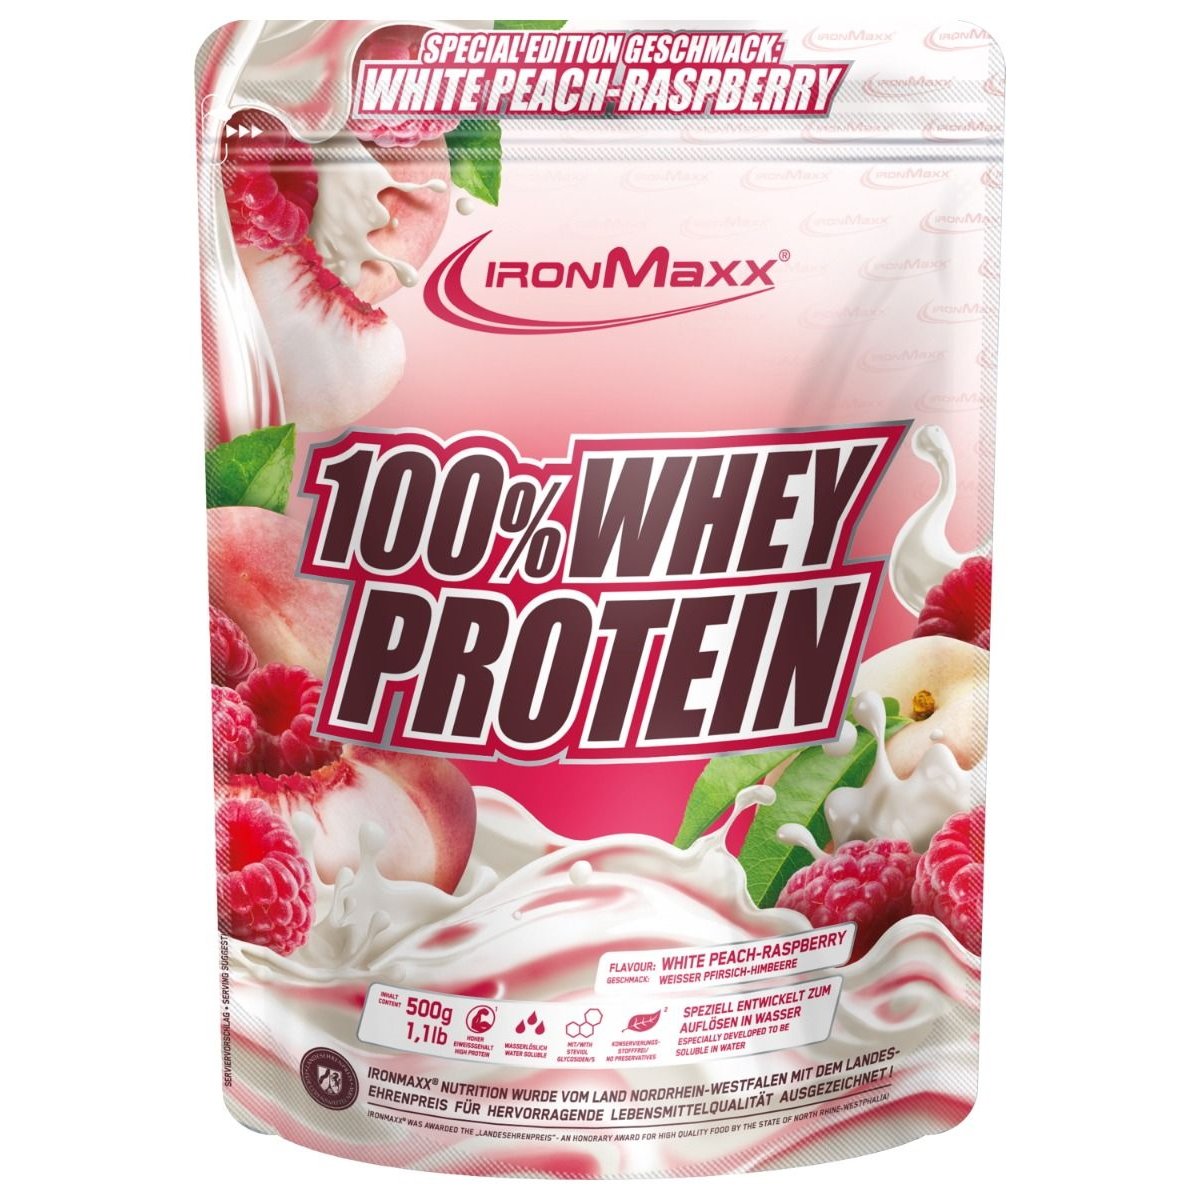 Протеин Ironmaxx 100% Whey Protein, 500 грамм Белый персик-малина,  мл, IronMaxx. Протеин. Набор массы Восстановление Антикатаболические свойства 